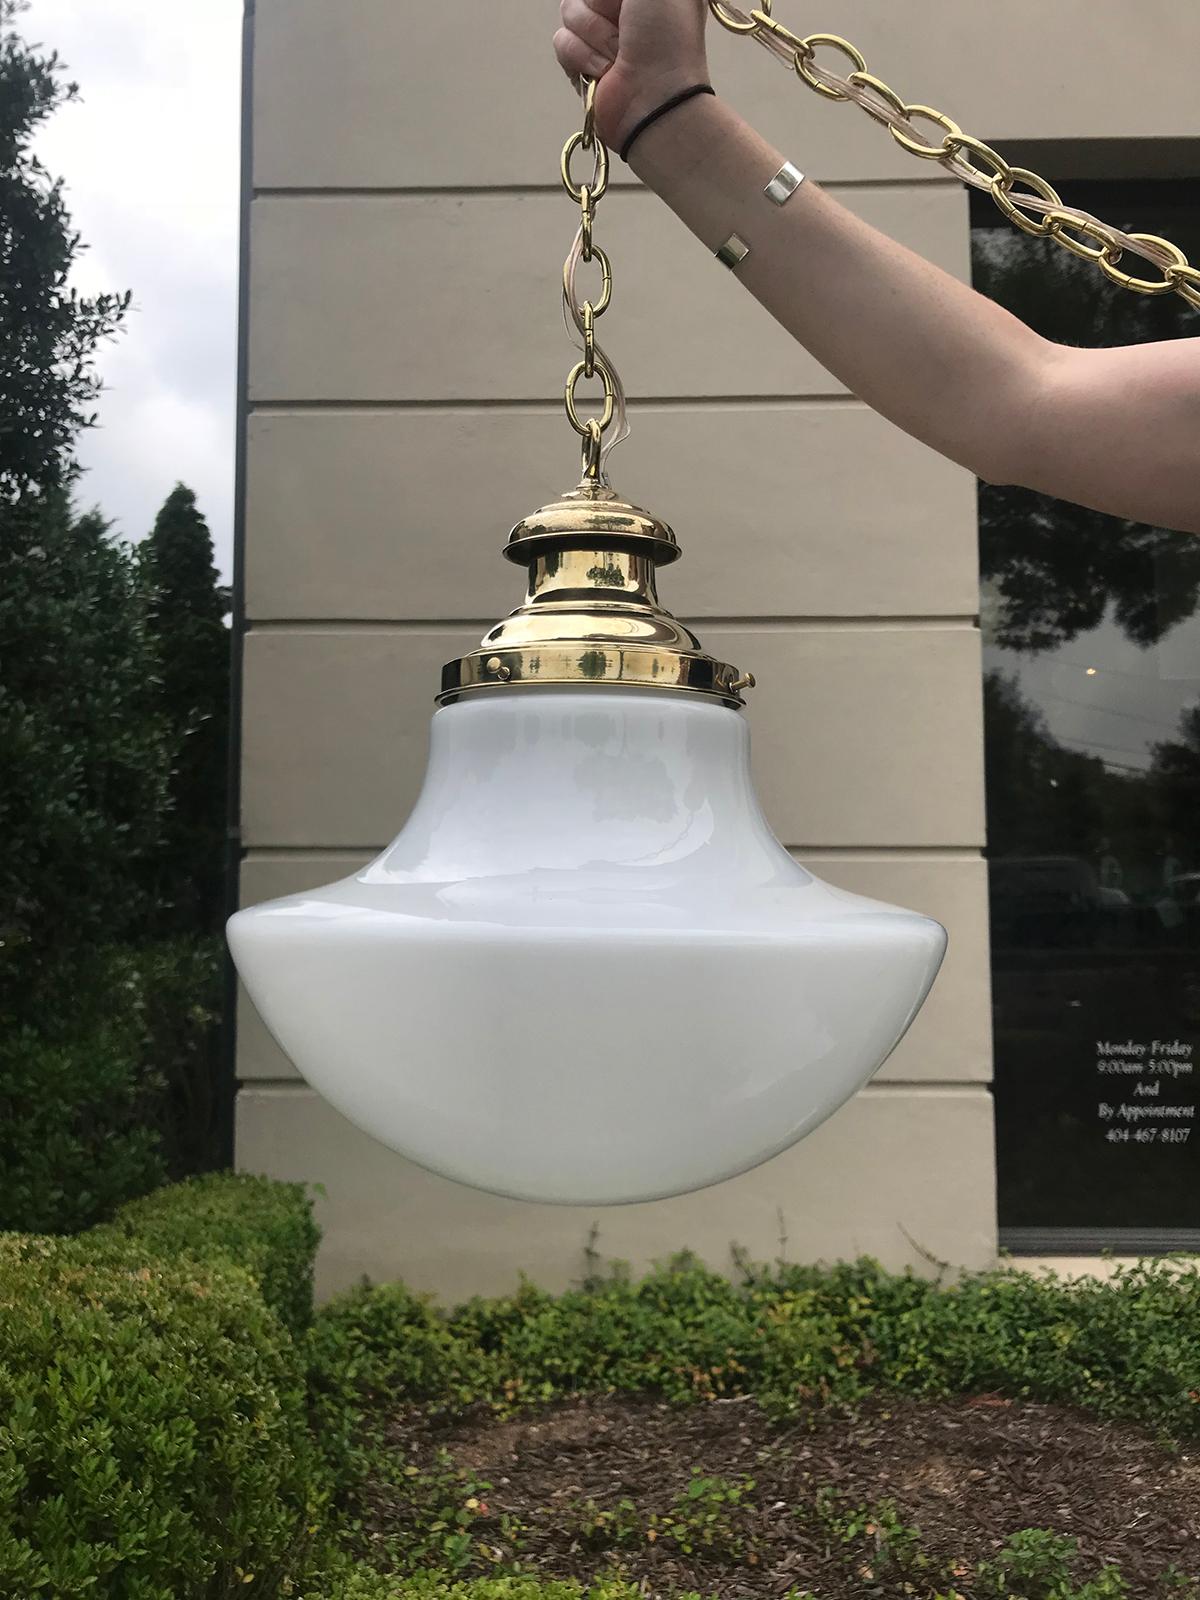 Pair of 20th century american milk glass pendant & brass hanging light fixtures
brand new wiring.